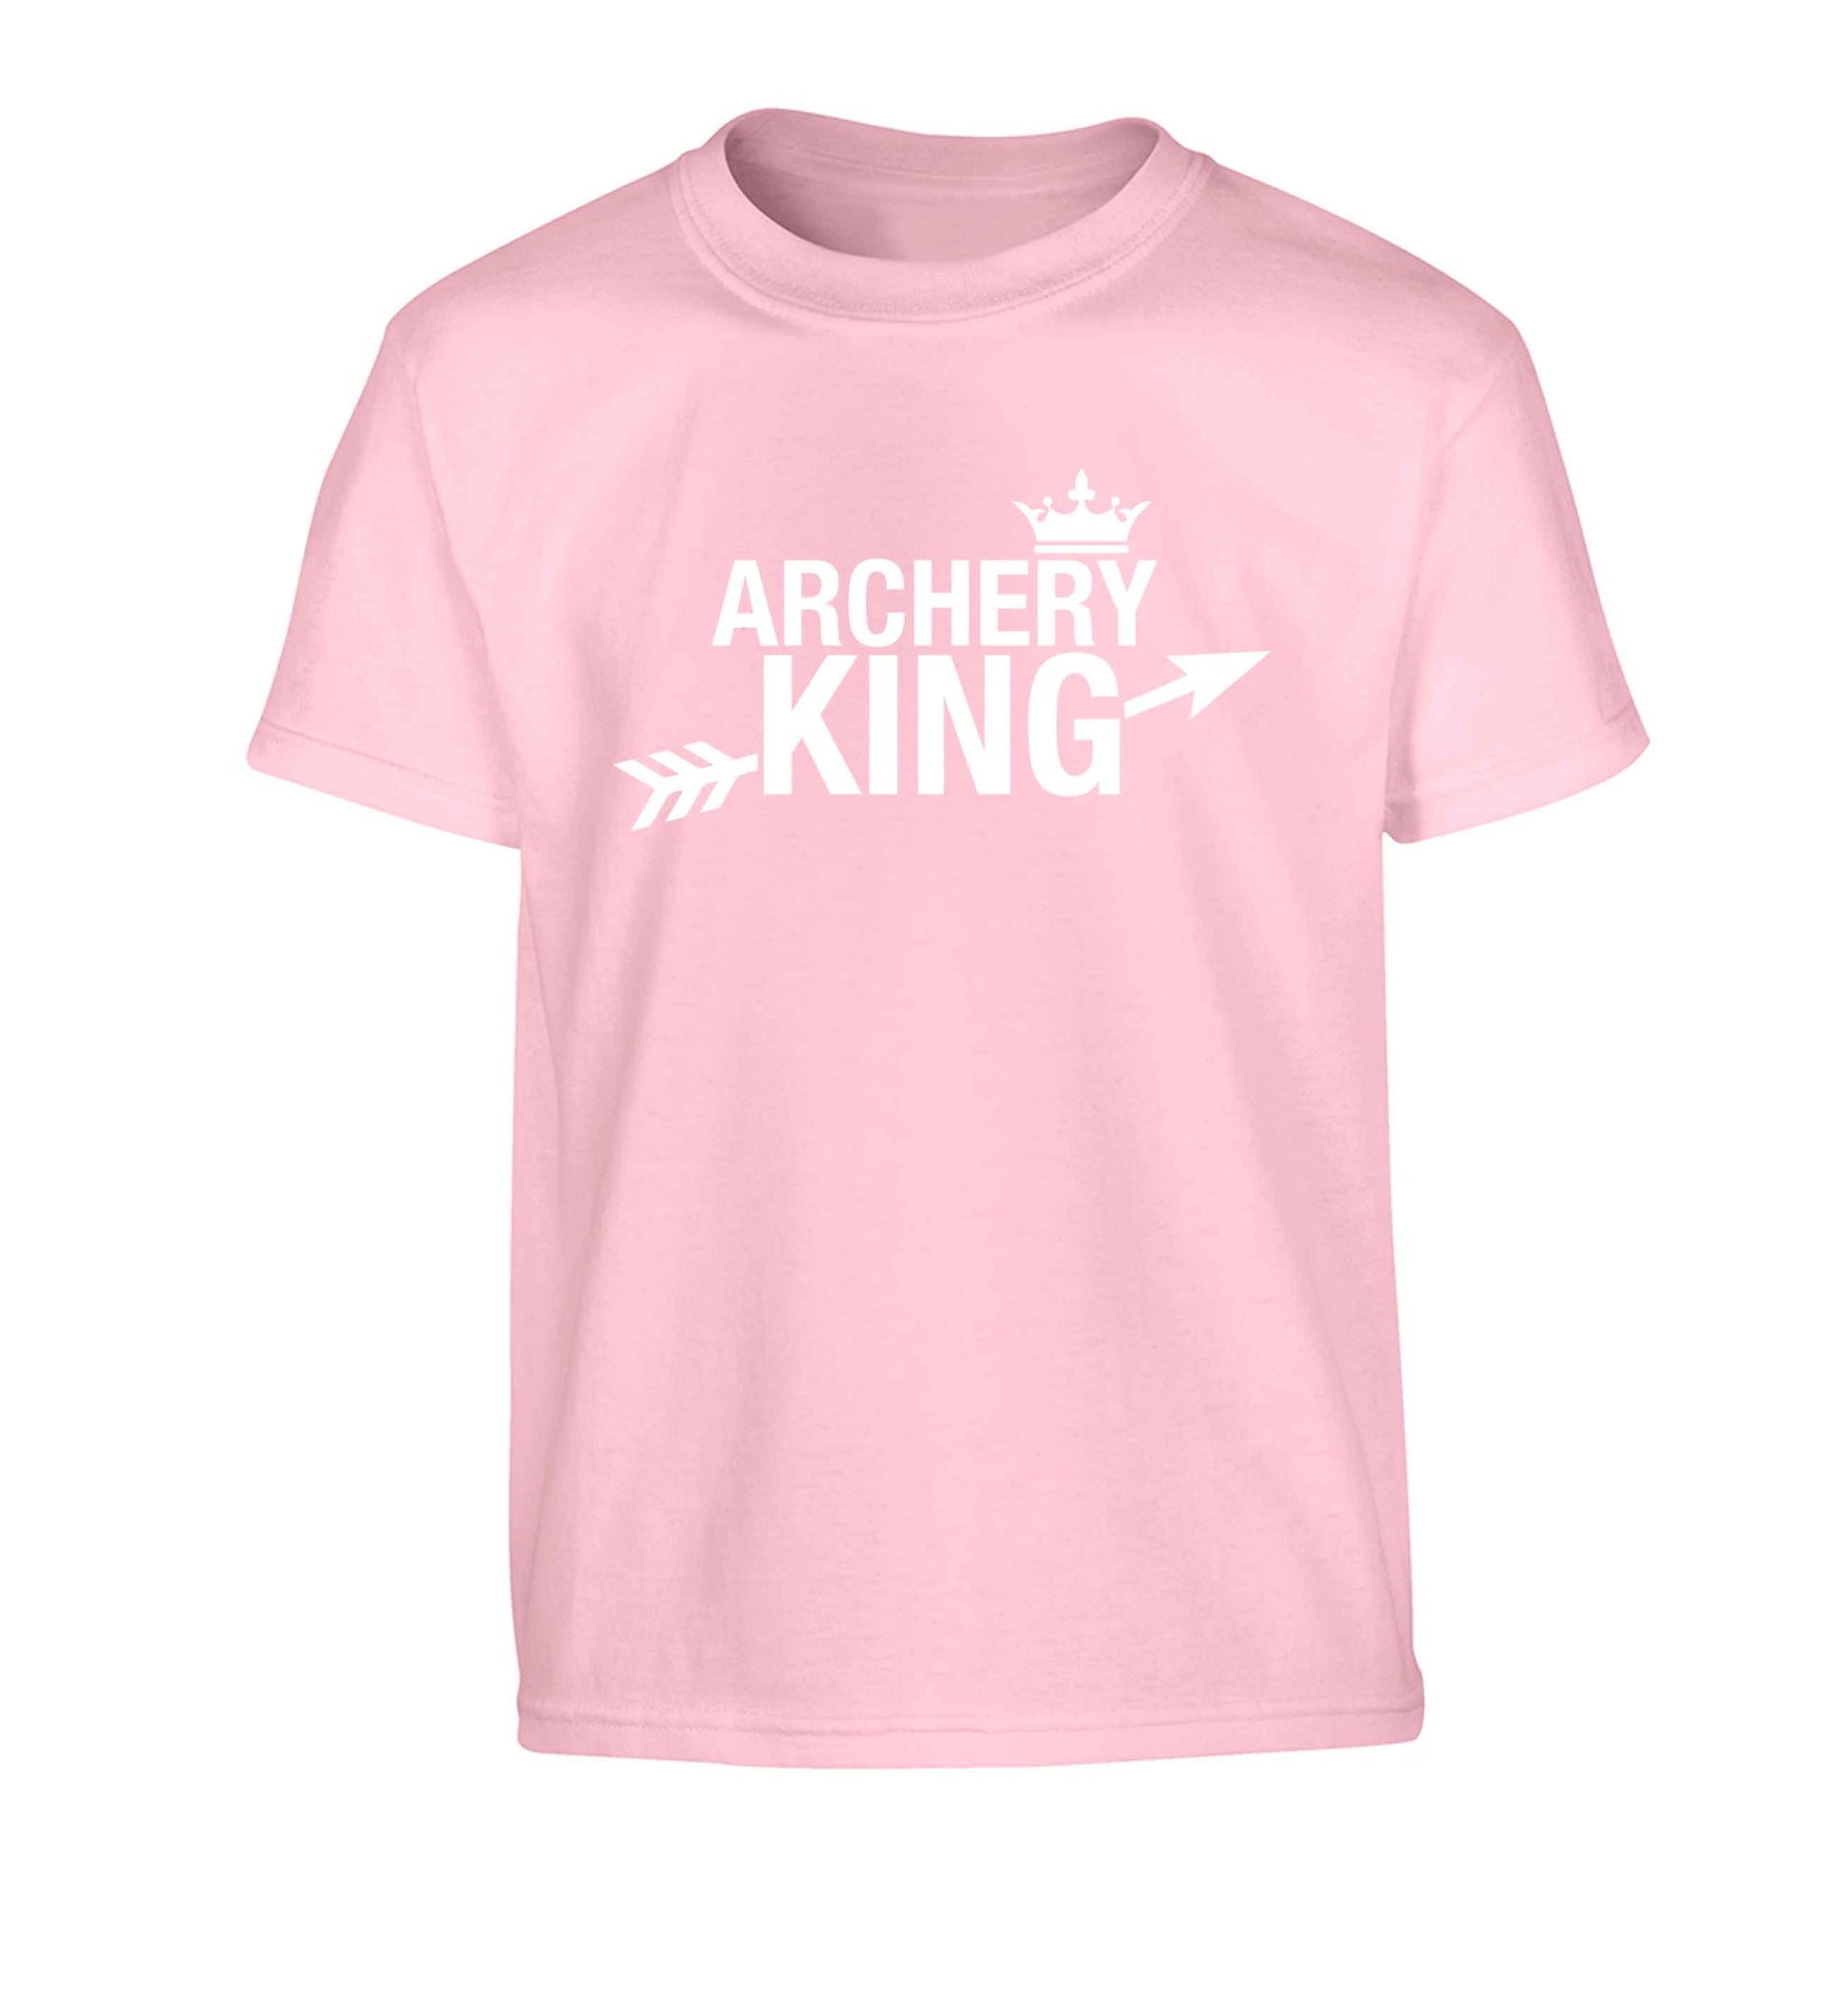 Archery king Children's light pink Tshirt 12-13 Years